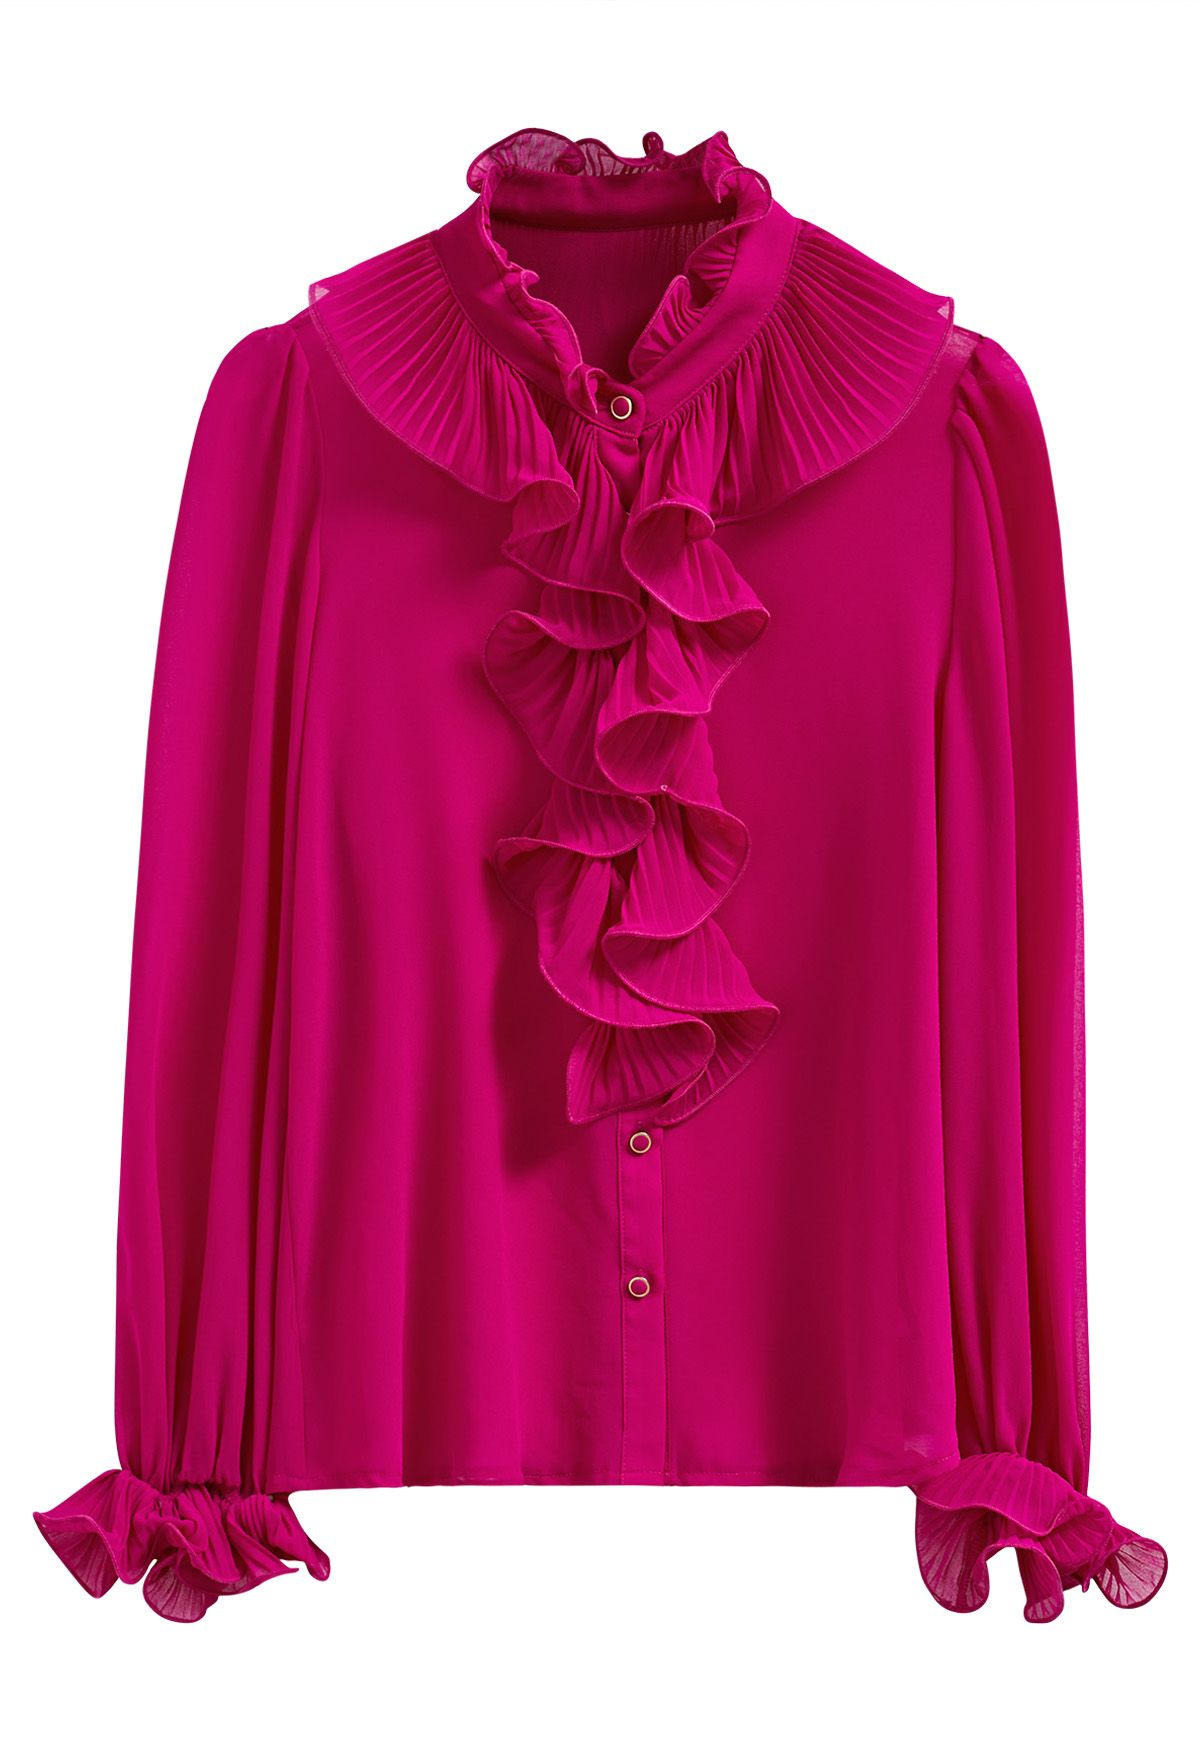 Ruffle Romance Chiffon Button-Up Shirt in Hot Pink